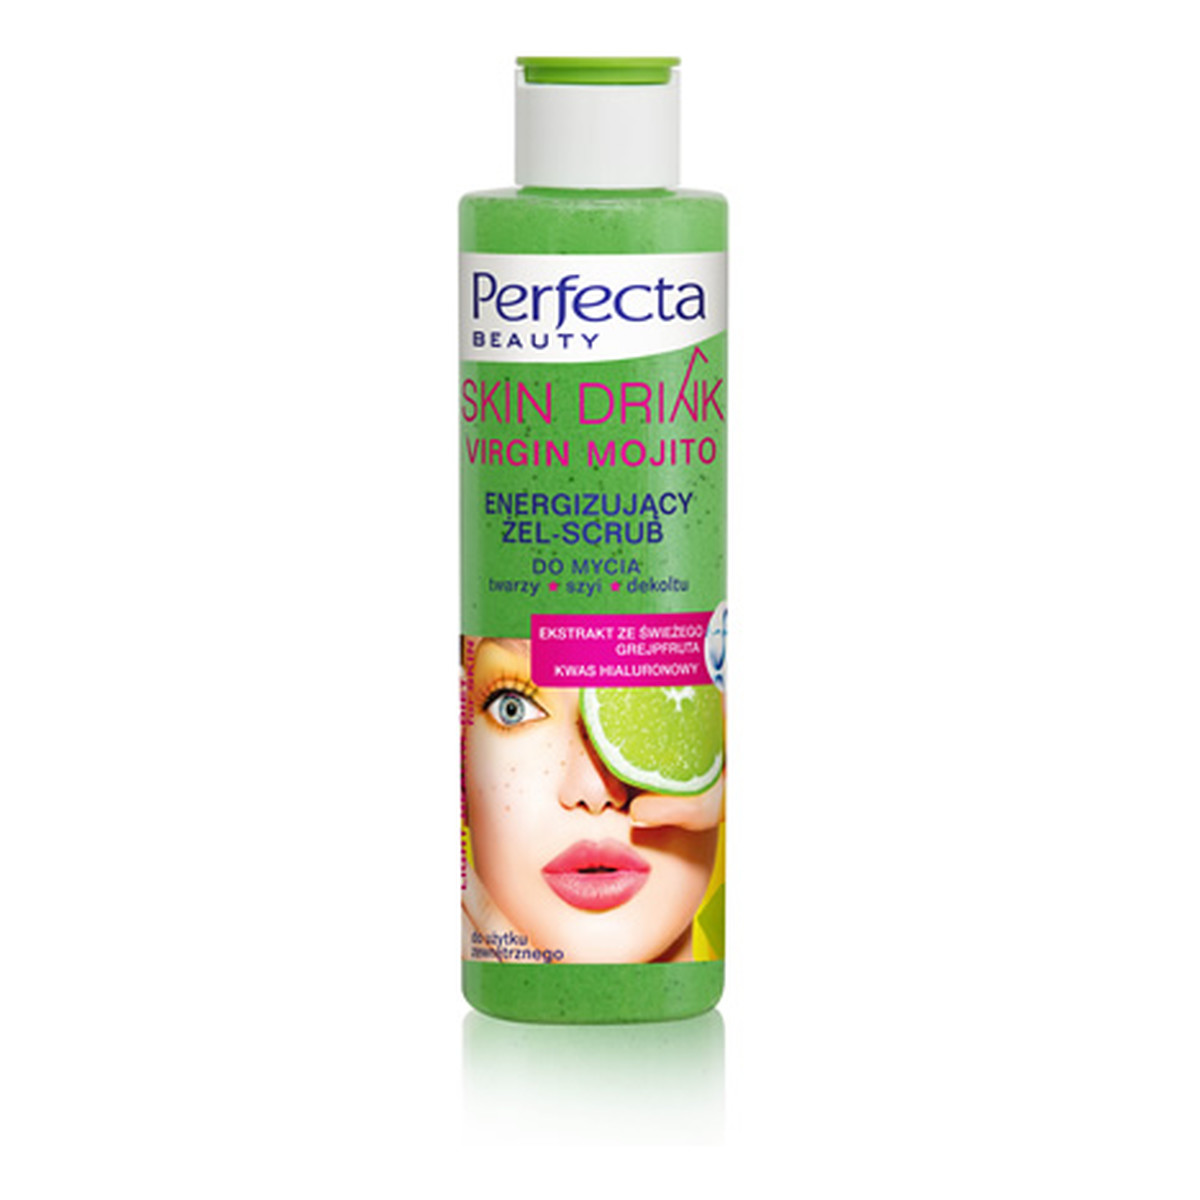 Perfecta Beauty Skin Drink Energizujący Żel-Scrub 200ml